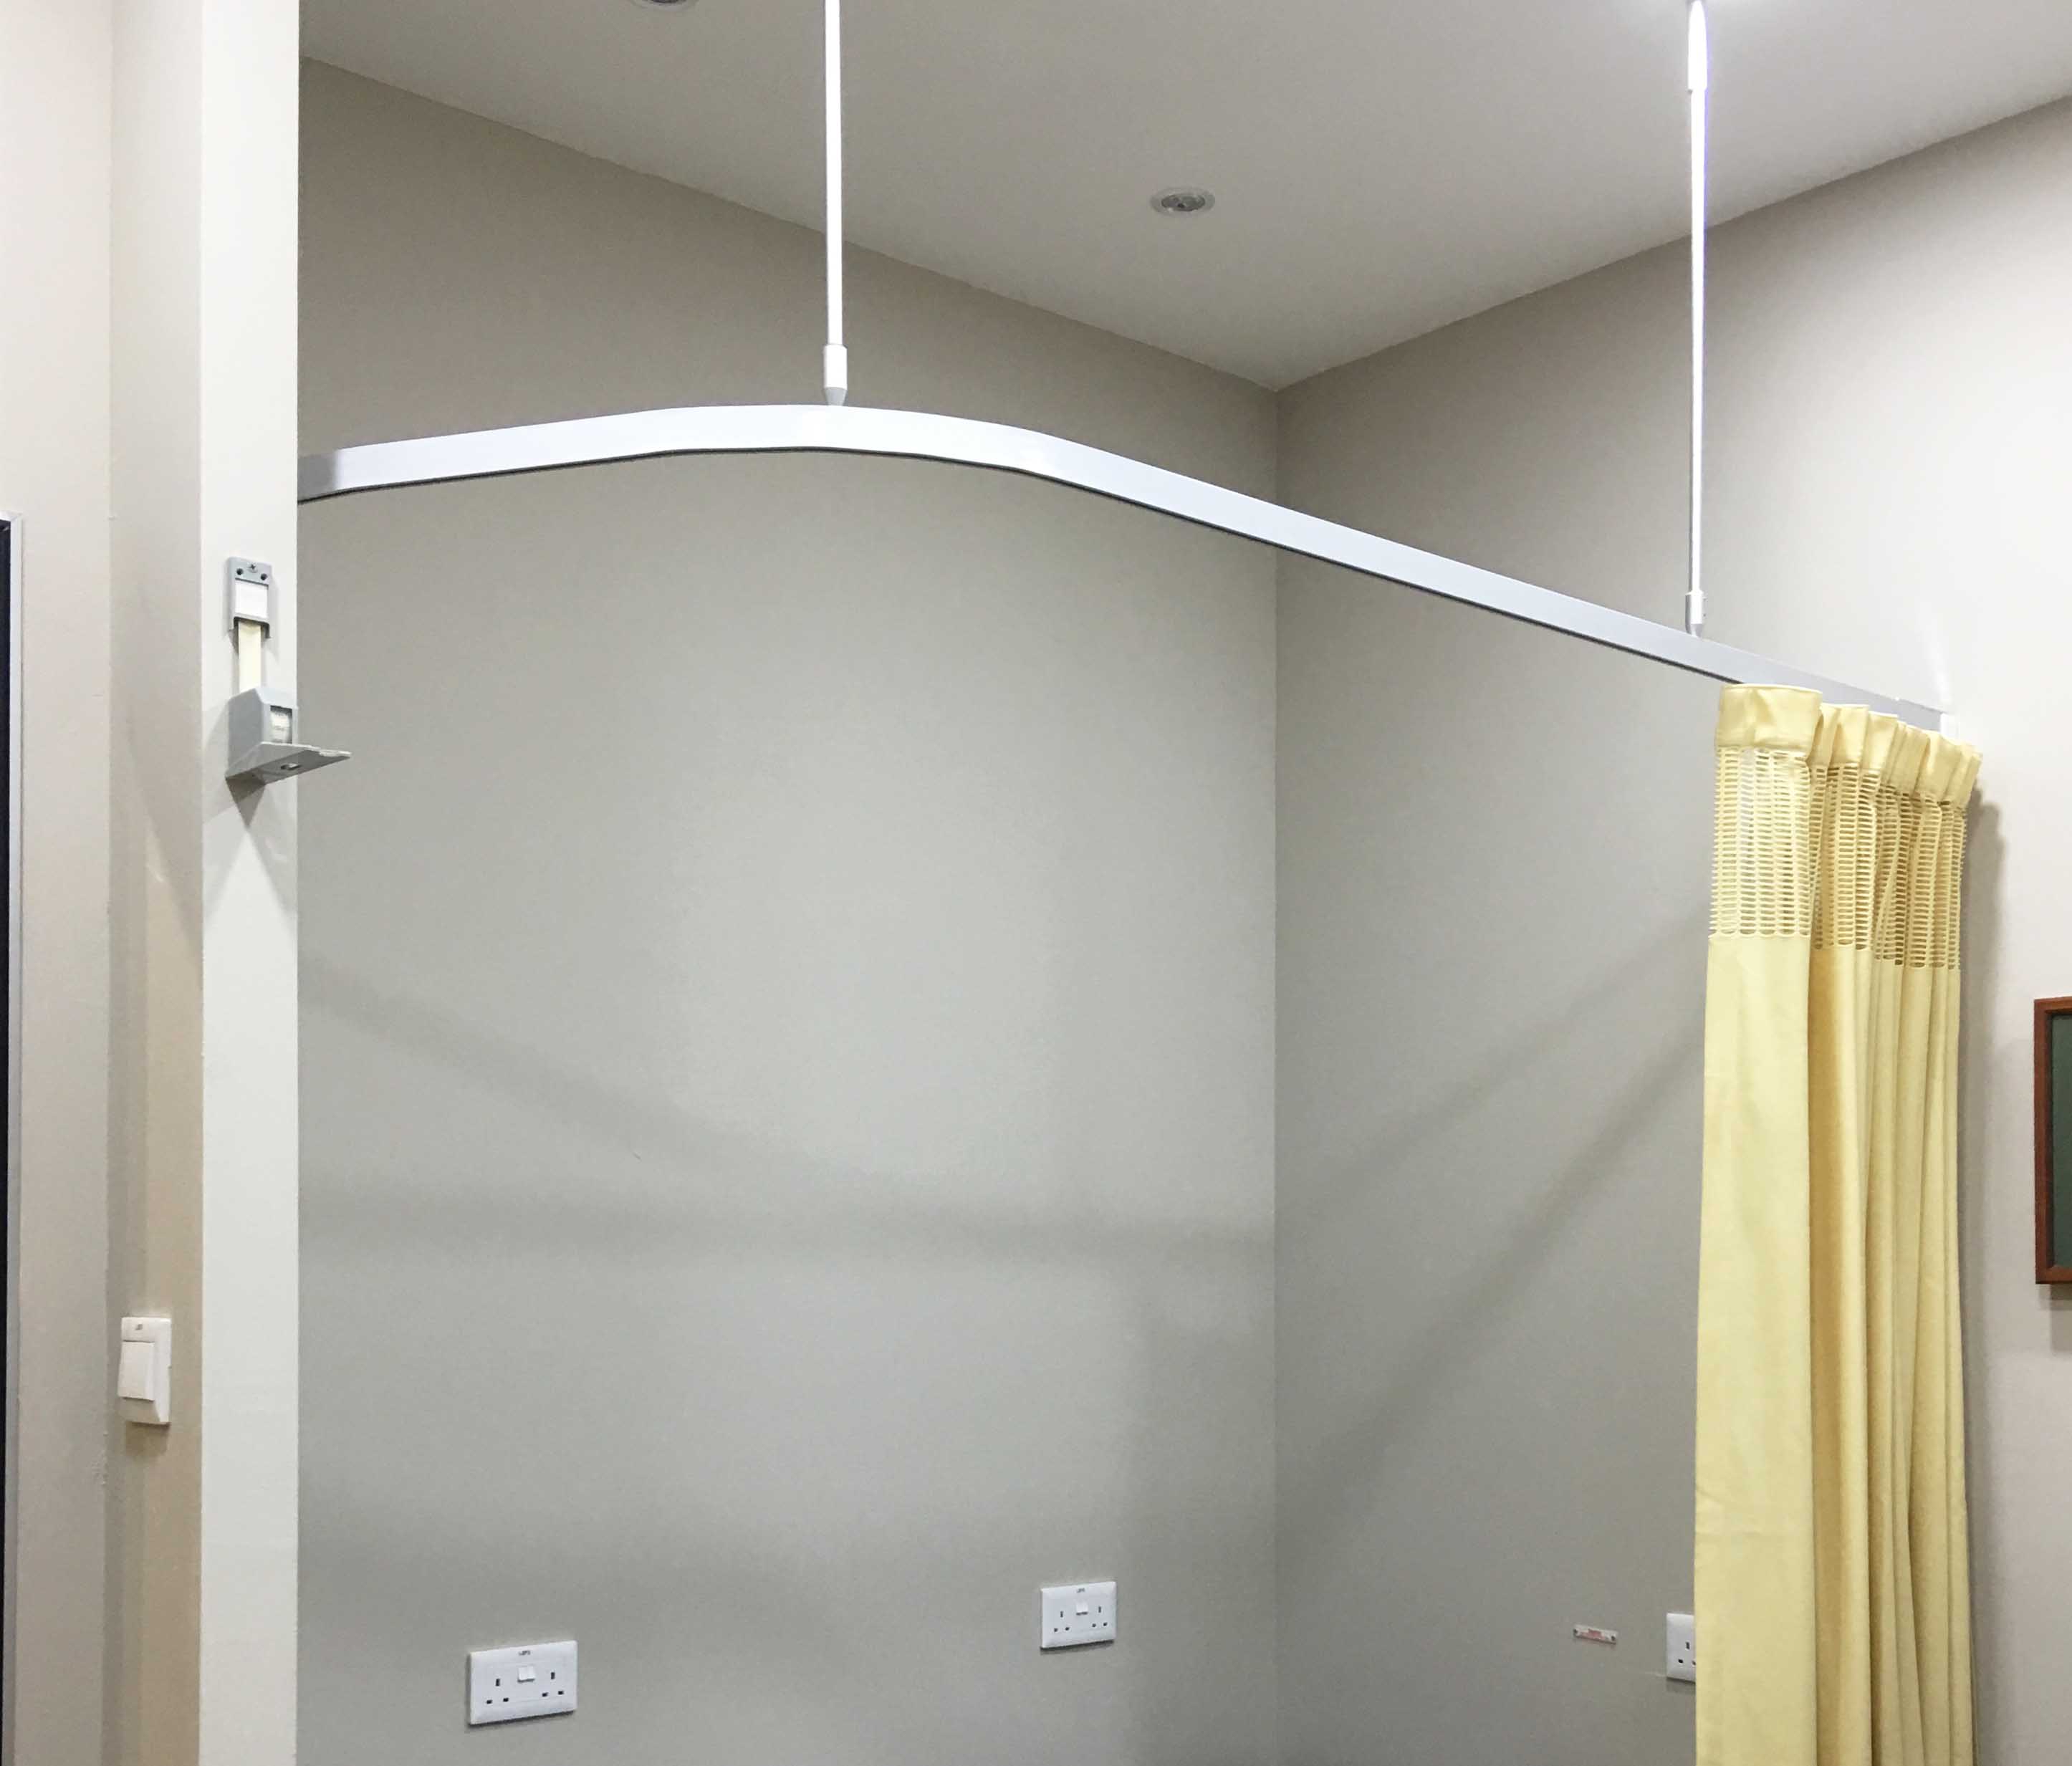 Hospital curtain tracks used in Singapore clinics and hospitals. Maximum curtain tie rod length 2.5m